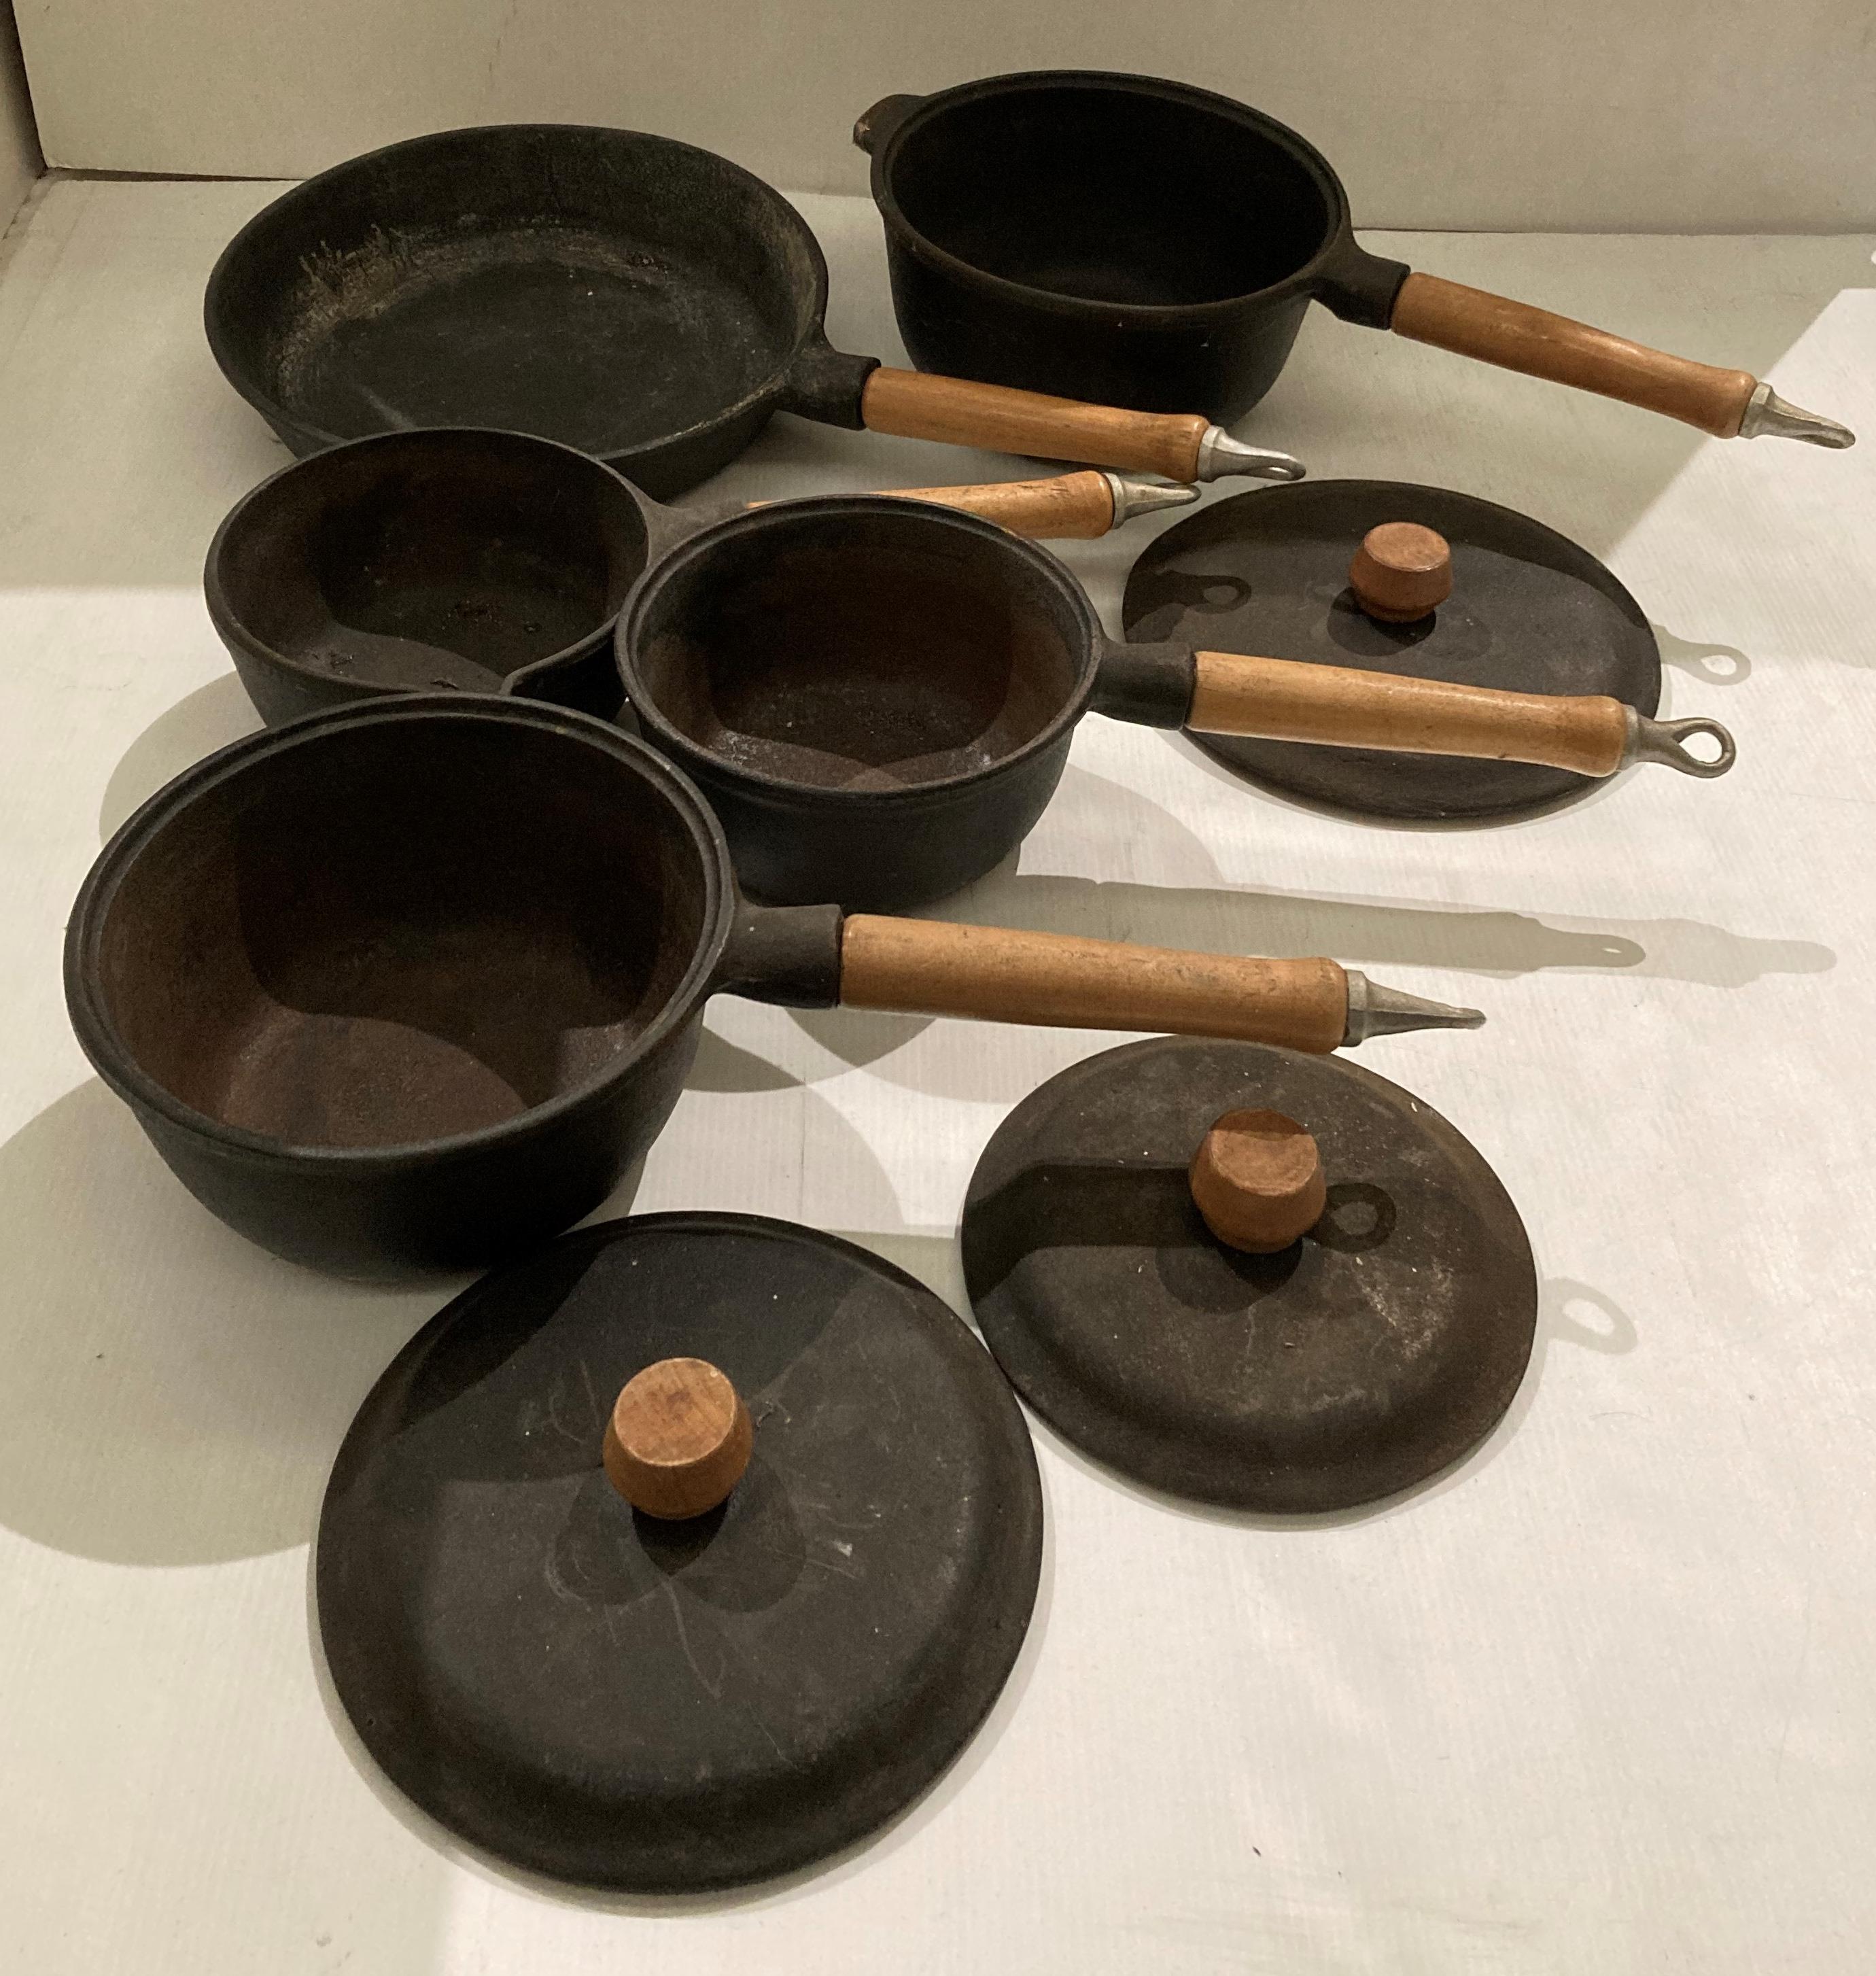 Five-piece cast iron pan set with wooden handles (saleroom location: S1QA06)